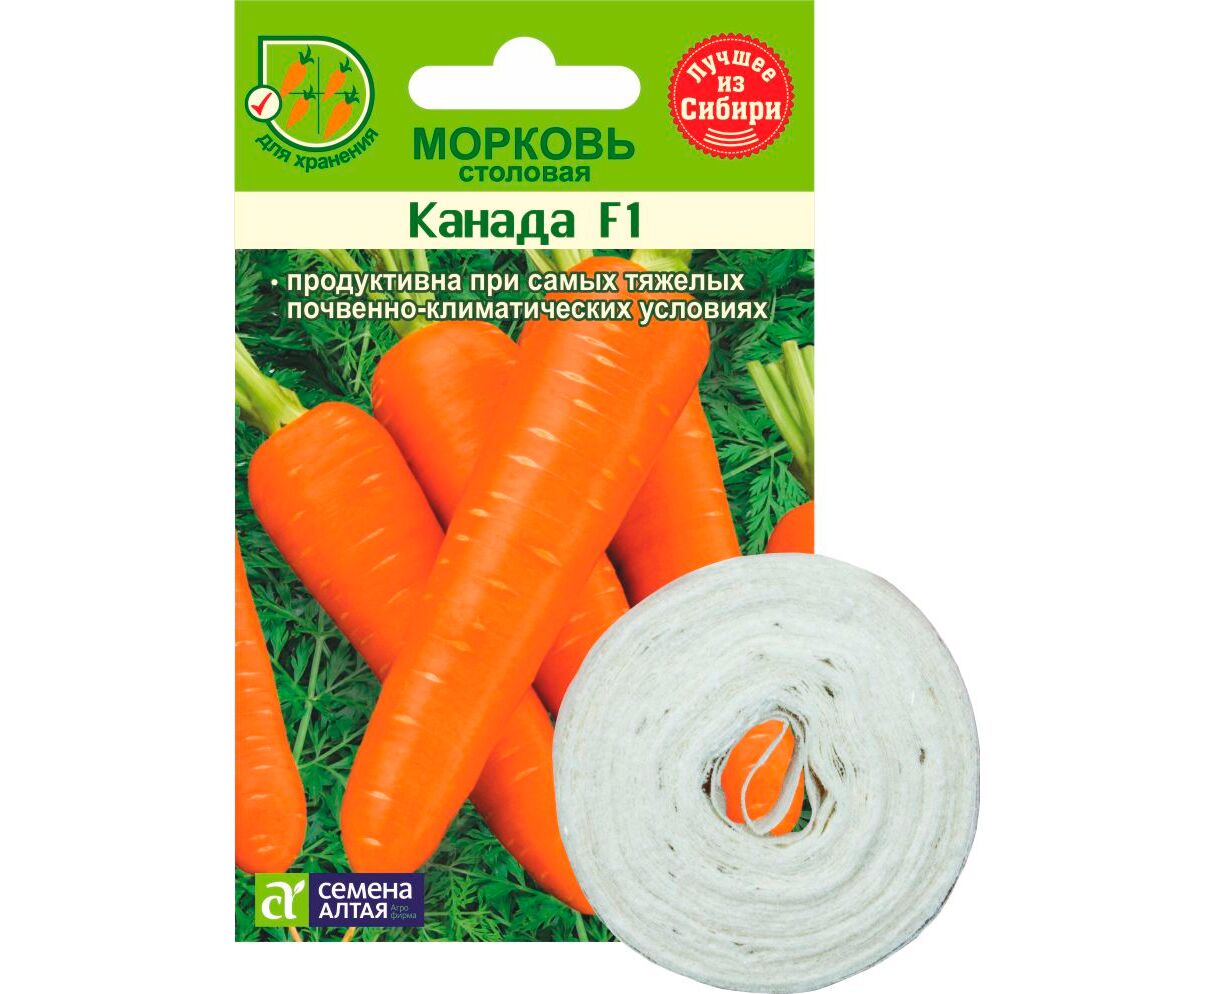 Морковь на ленте купить. Морковь Канада f1. Семена Алтая сорта моркови. Семена моркови на ленте.